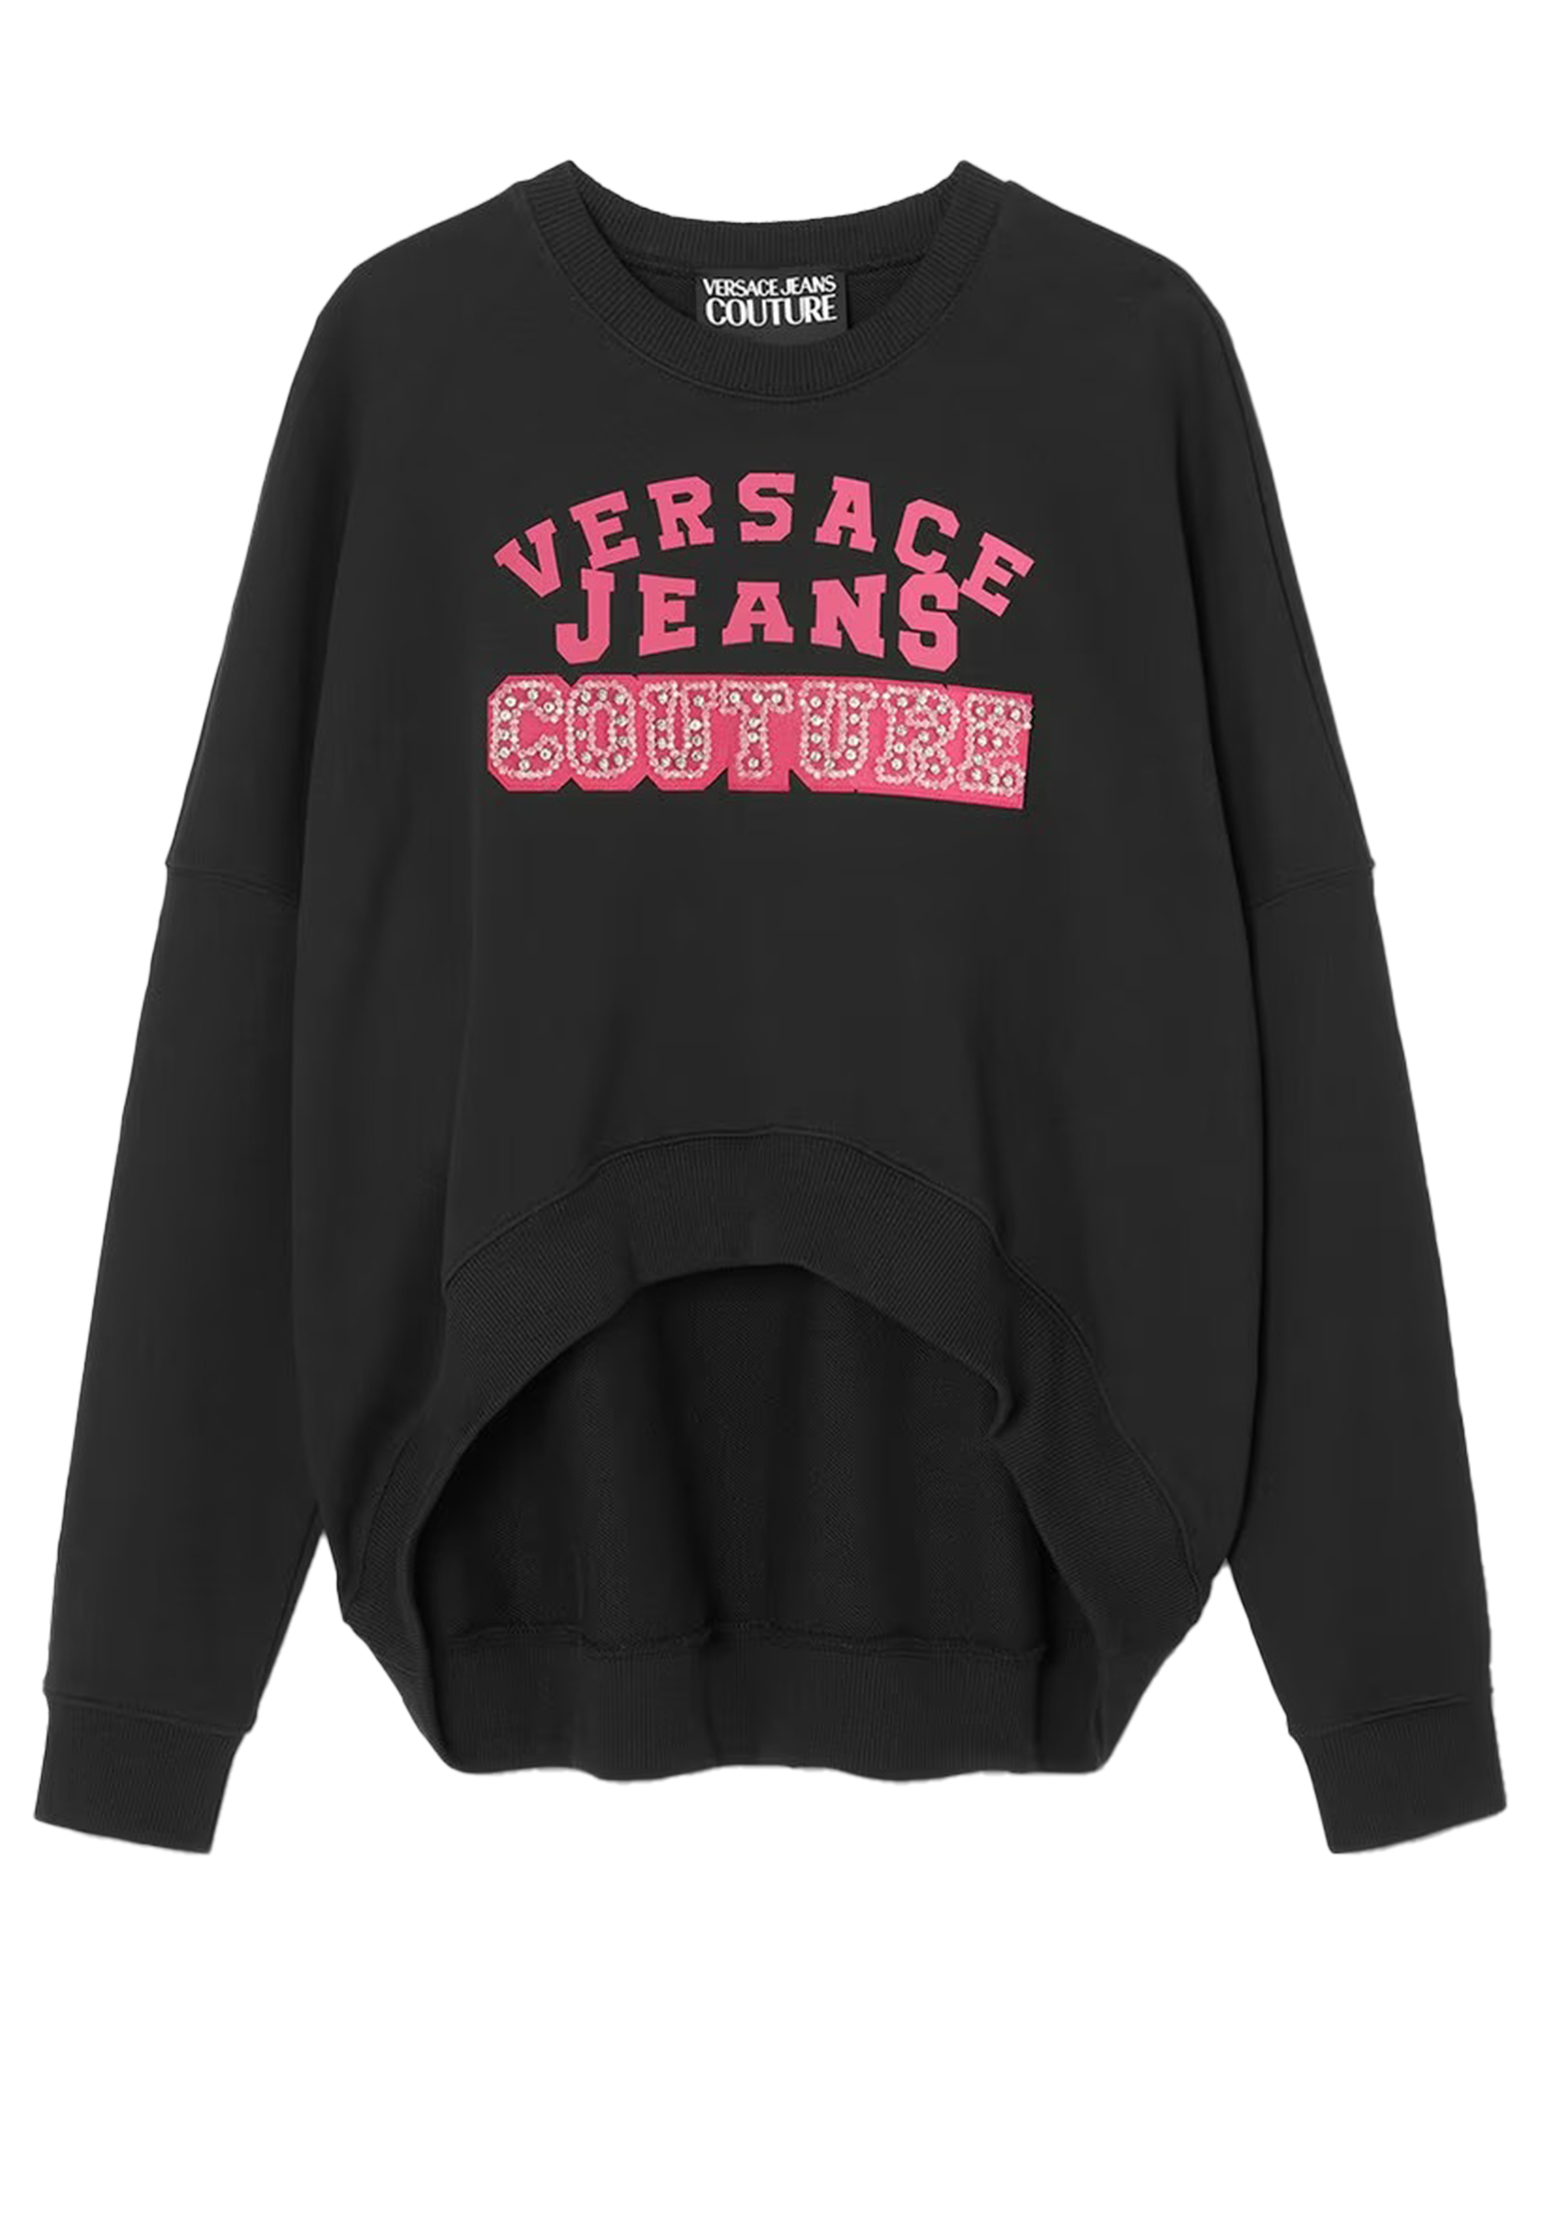 Пуловер VERSACE JEANS COUTURE Черный, размер M